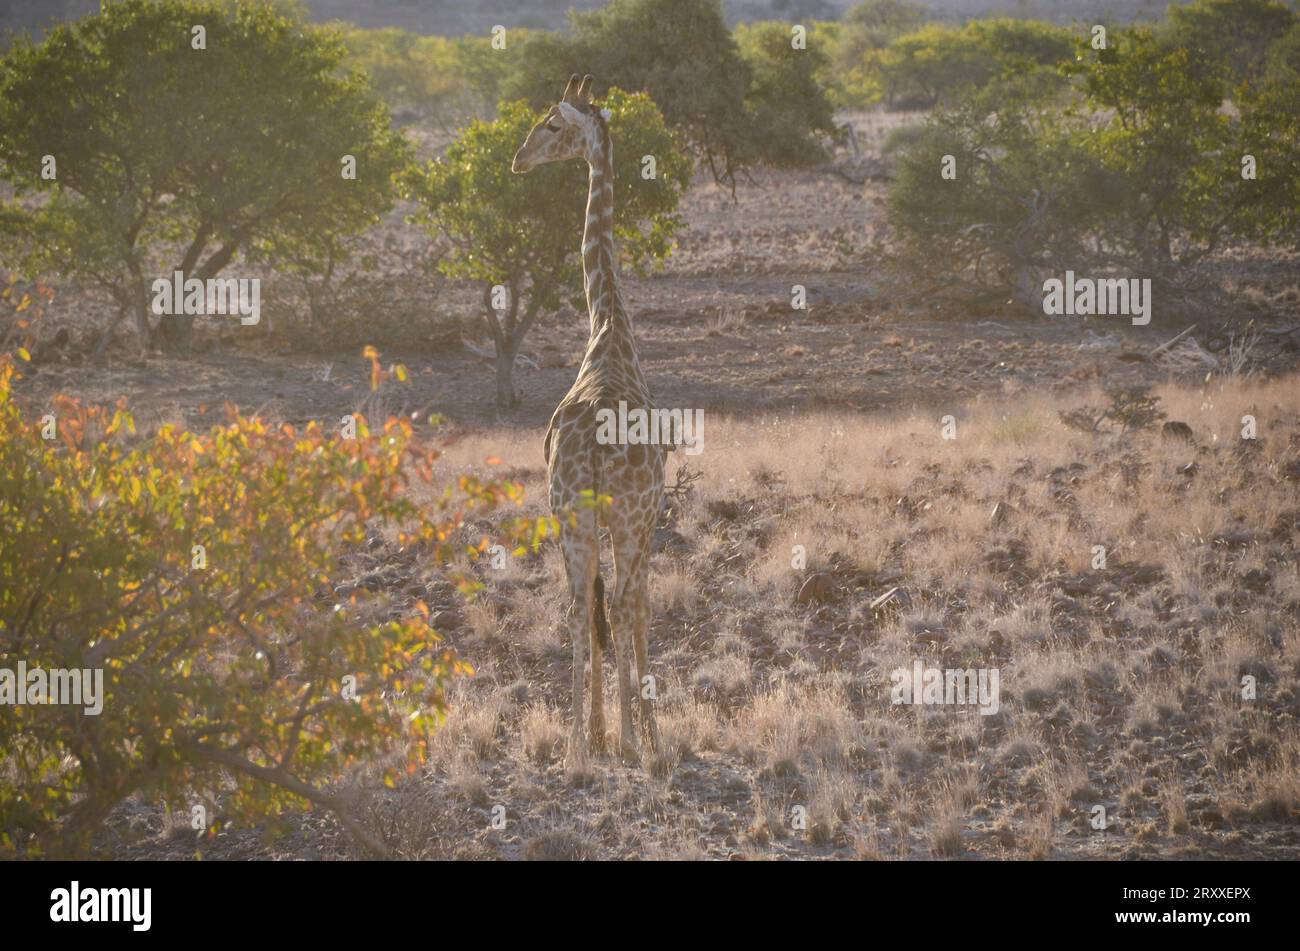 giraffe in the Kaokoland region, namibia Stock Photo